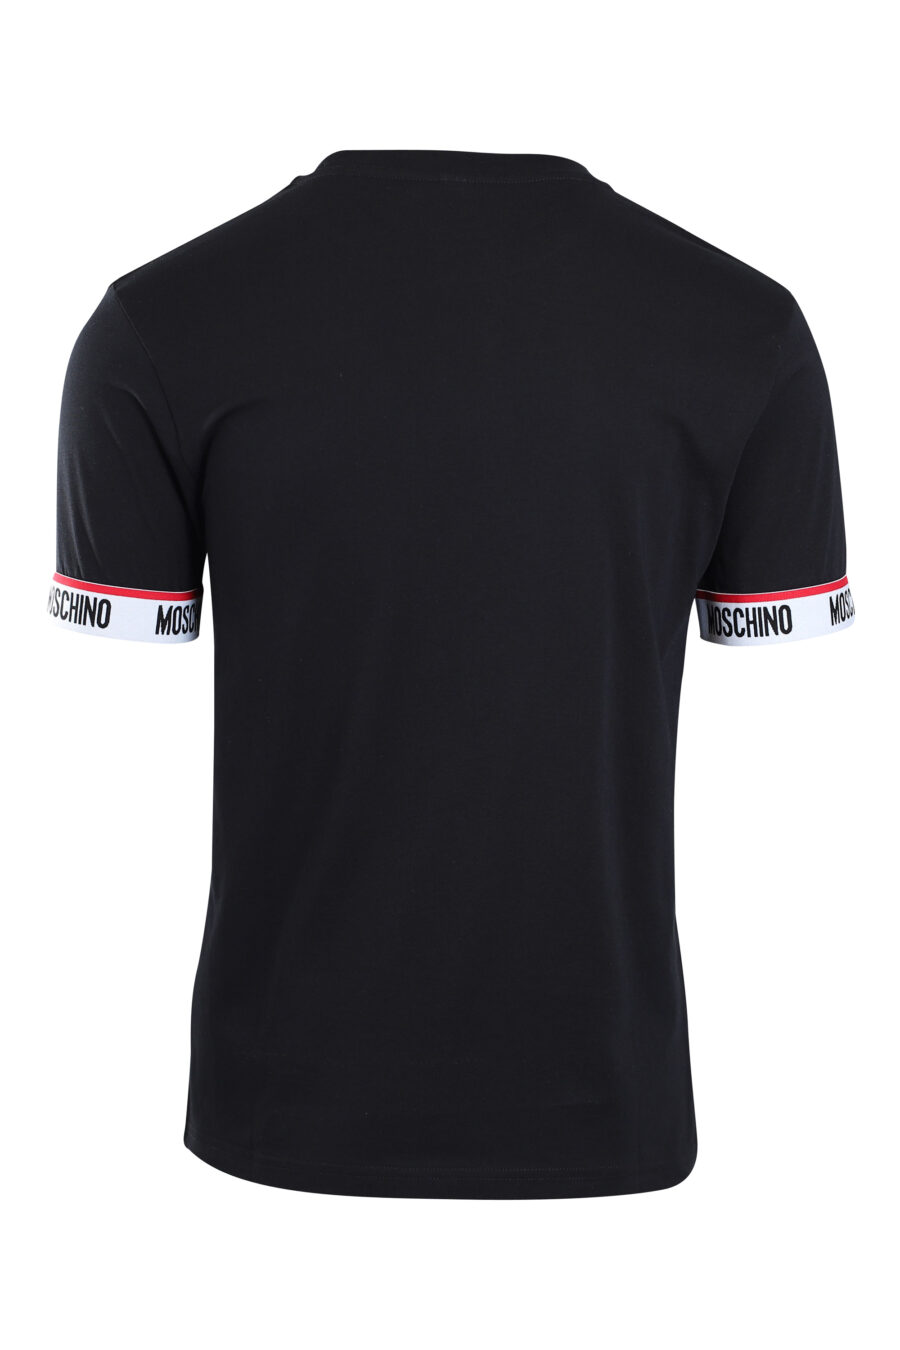 Camiseta negra con logo en banda en mangas y minilogo monocromático - IMG 2158